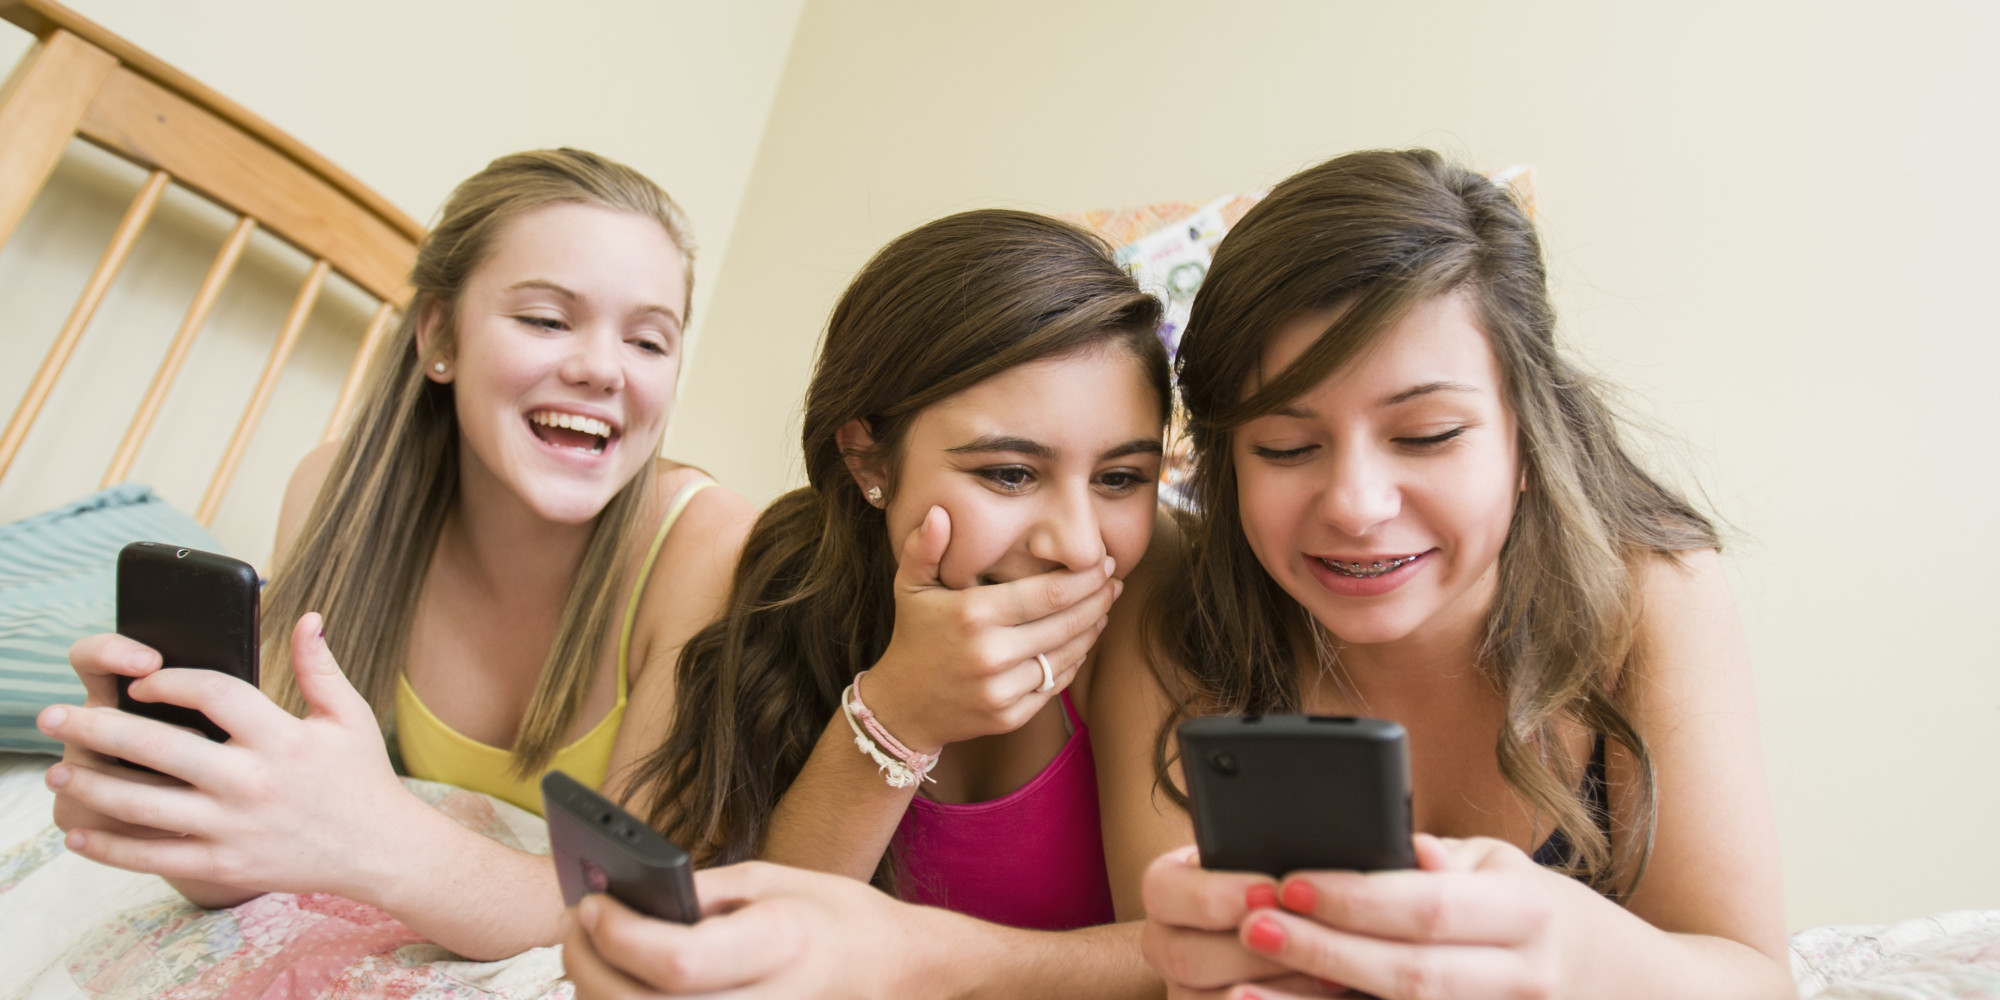 Teens Using The Internet